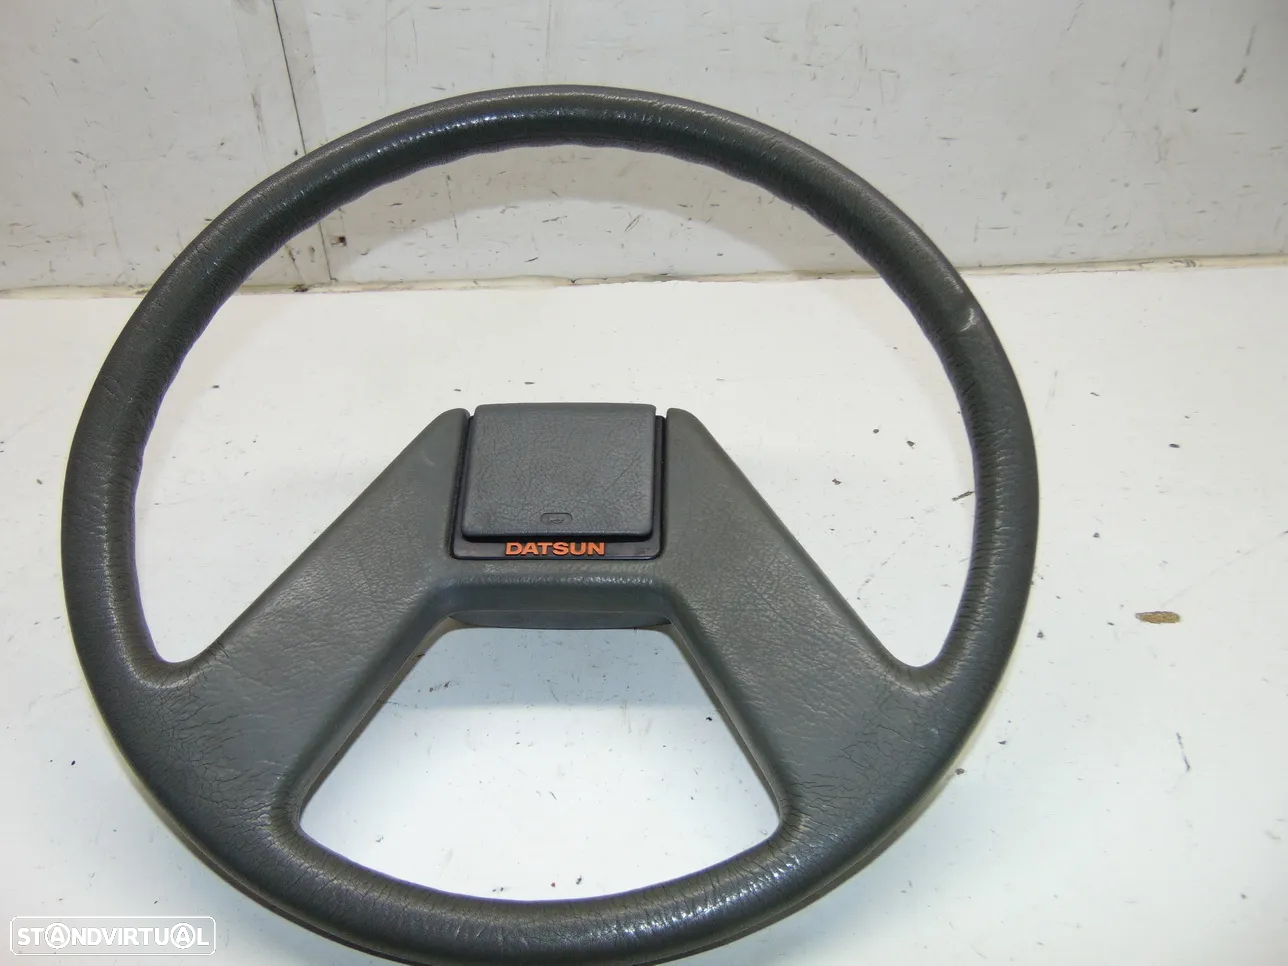 Datsun Stanza coupê volante - 5